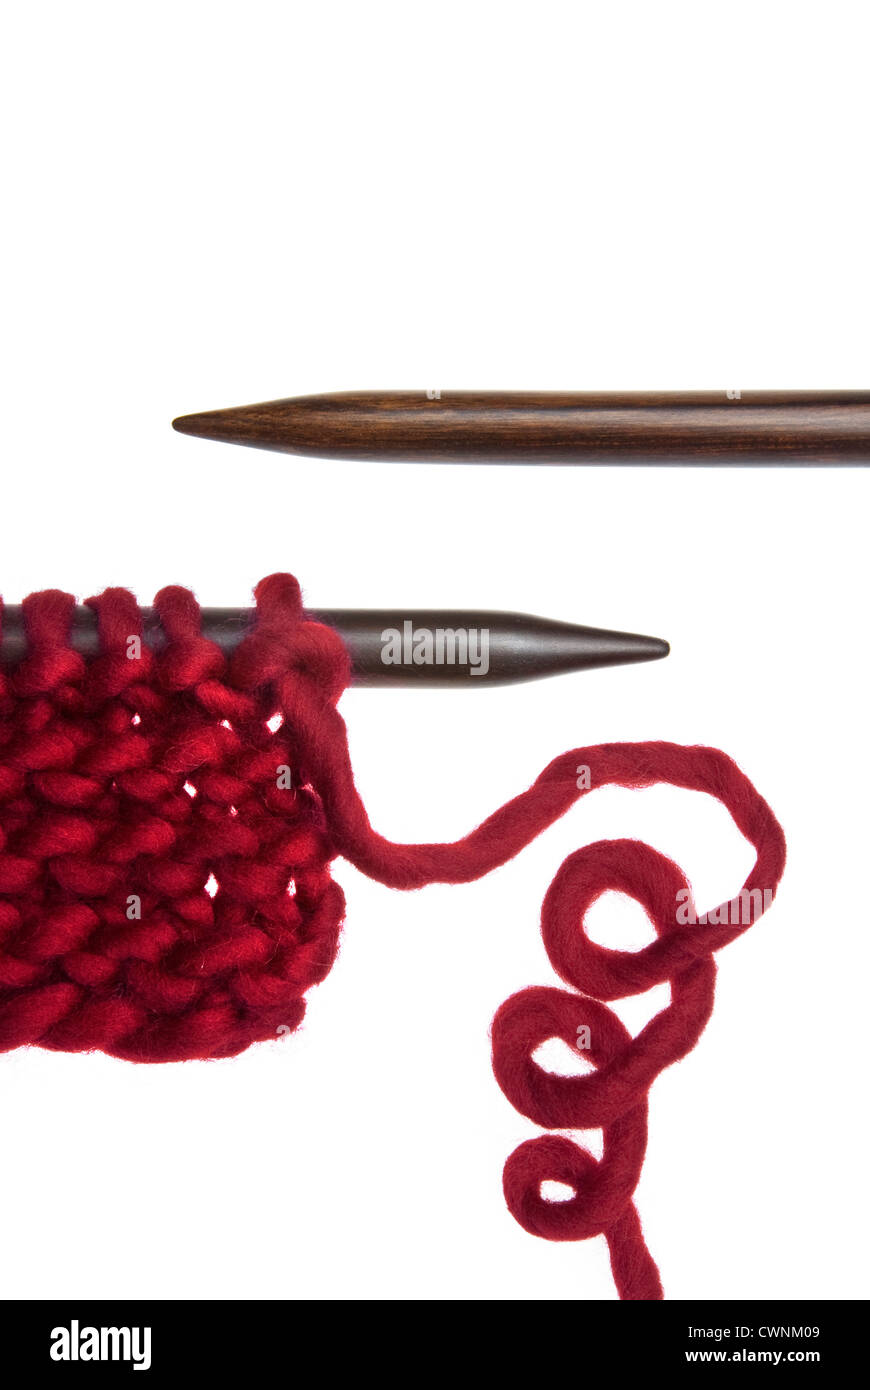 Knitting needles and wool, isolated on 100% white background Stock Photo